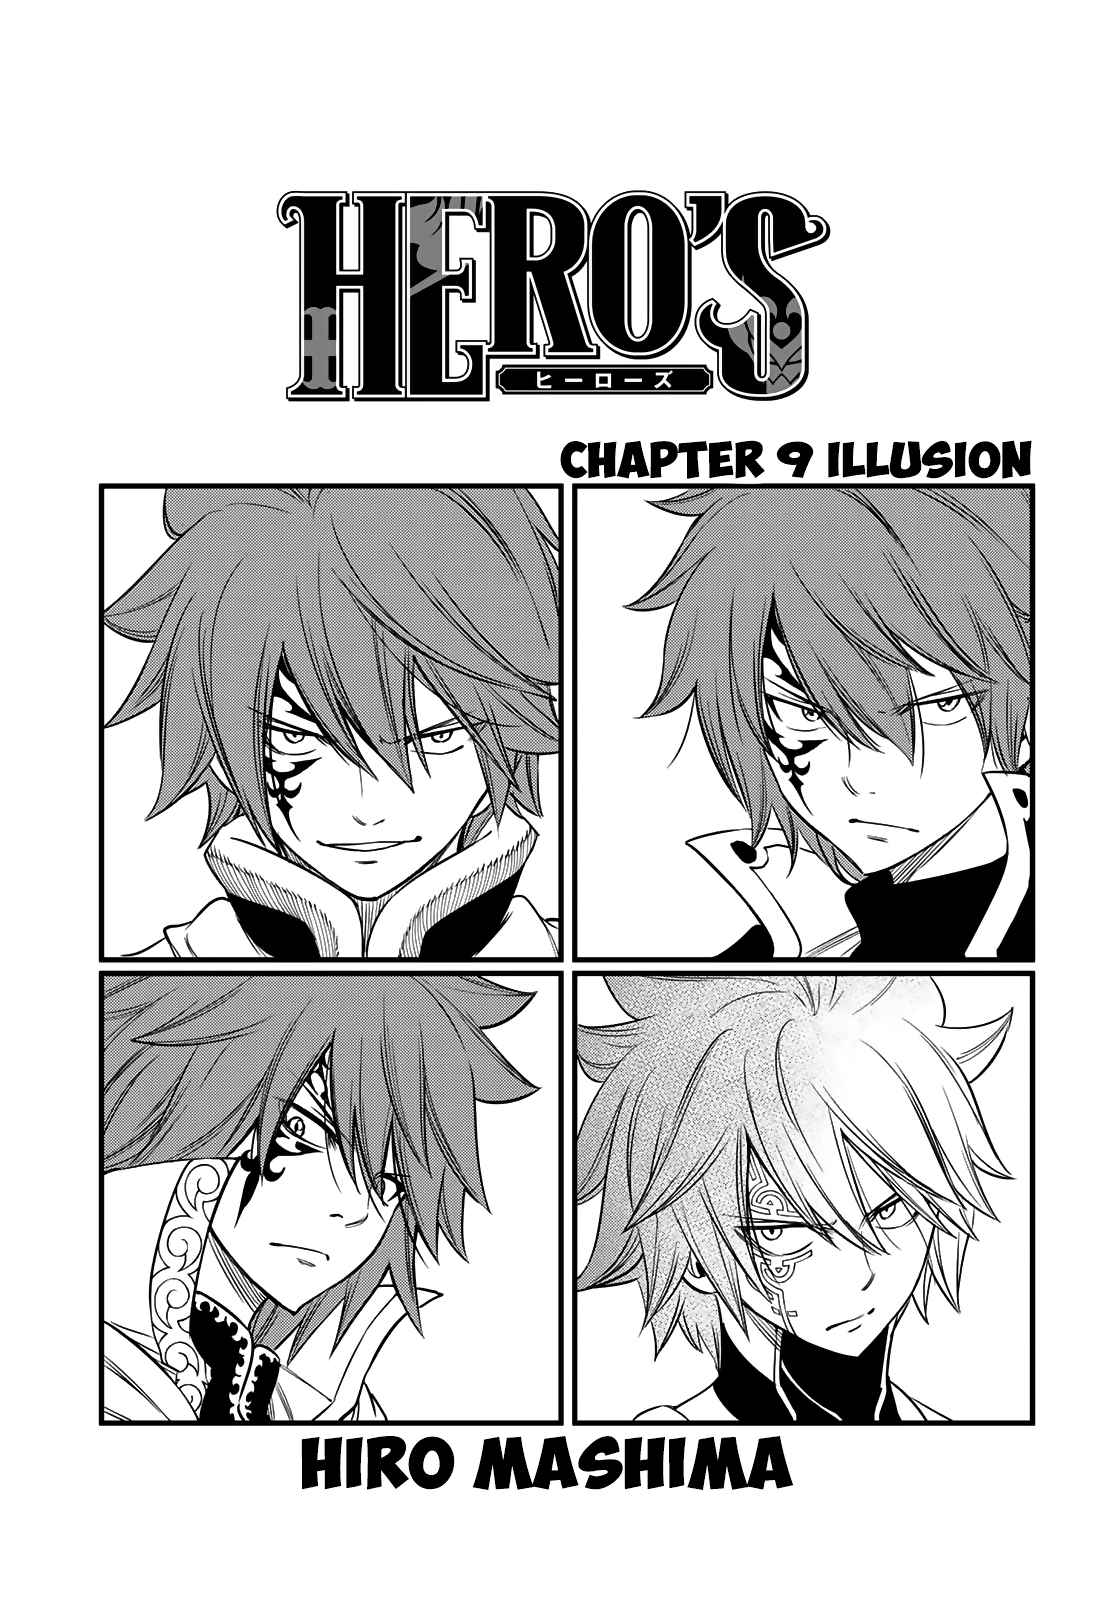 Hero's Ch. 9 Illusion